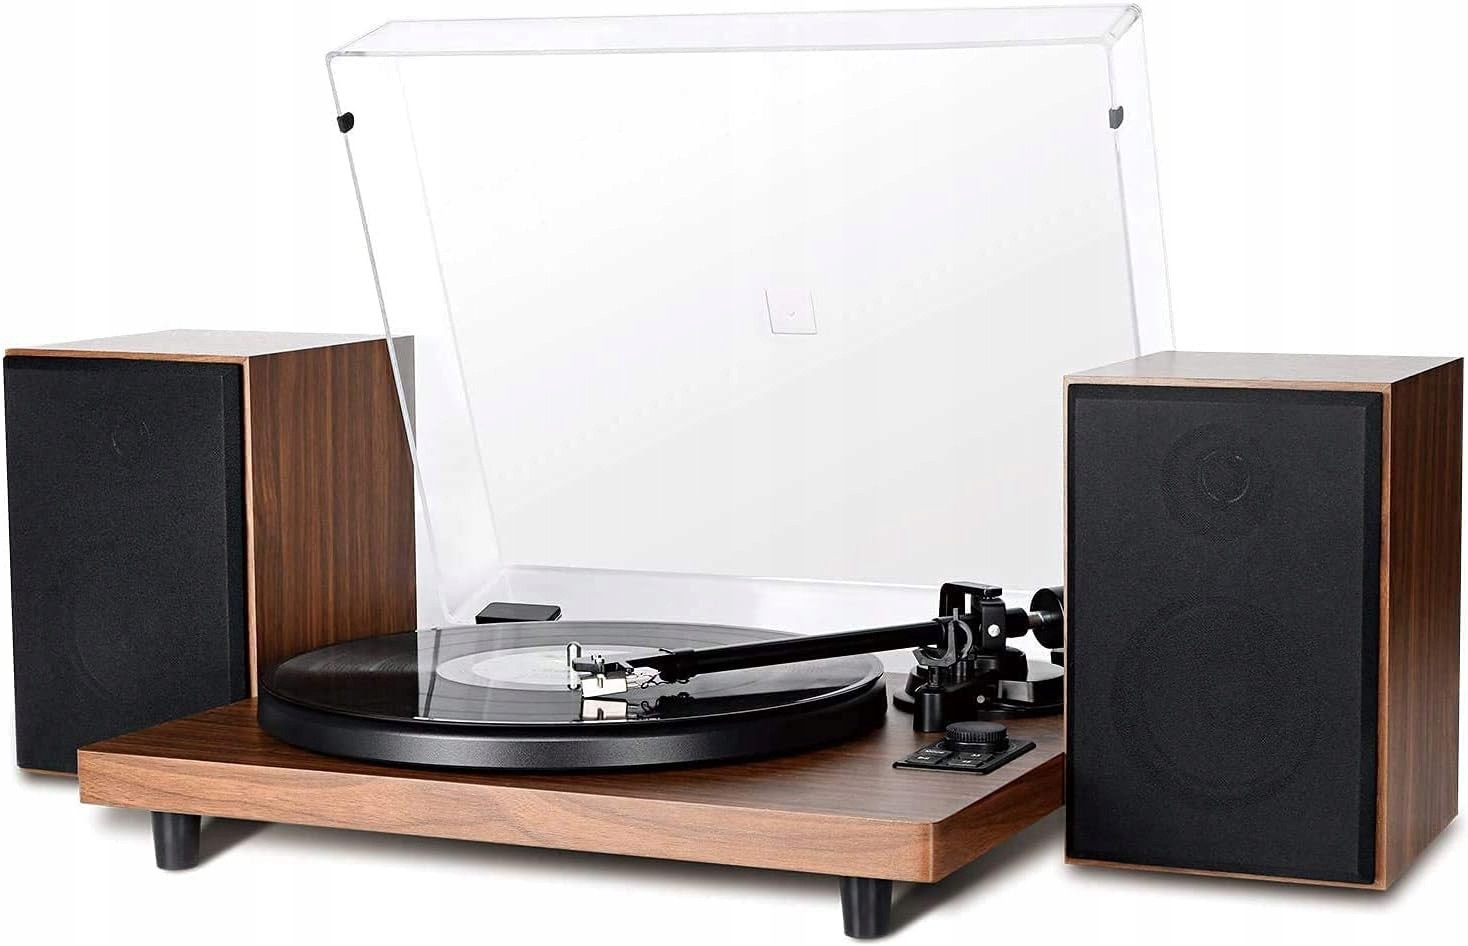 Vinylový gramofon bluetooth usb vinylová deska reproduktory kompatibilní systém